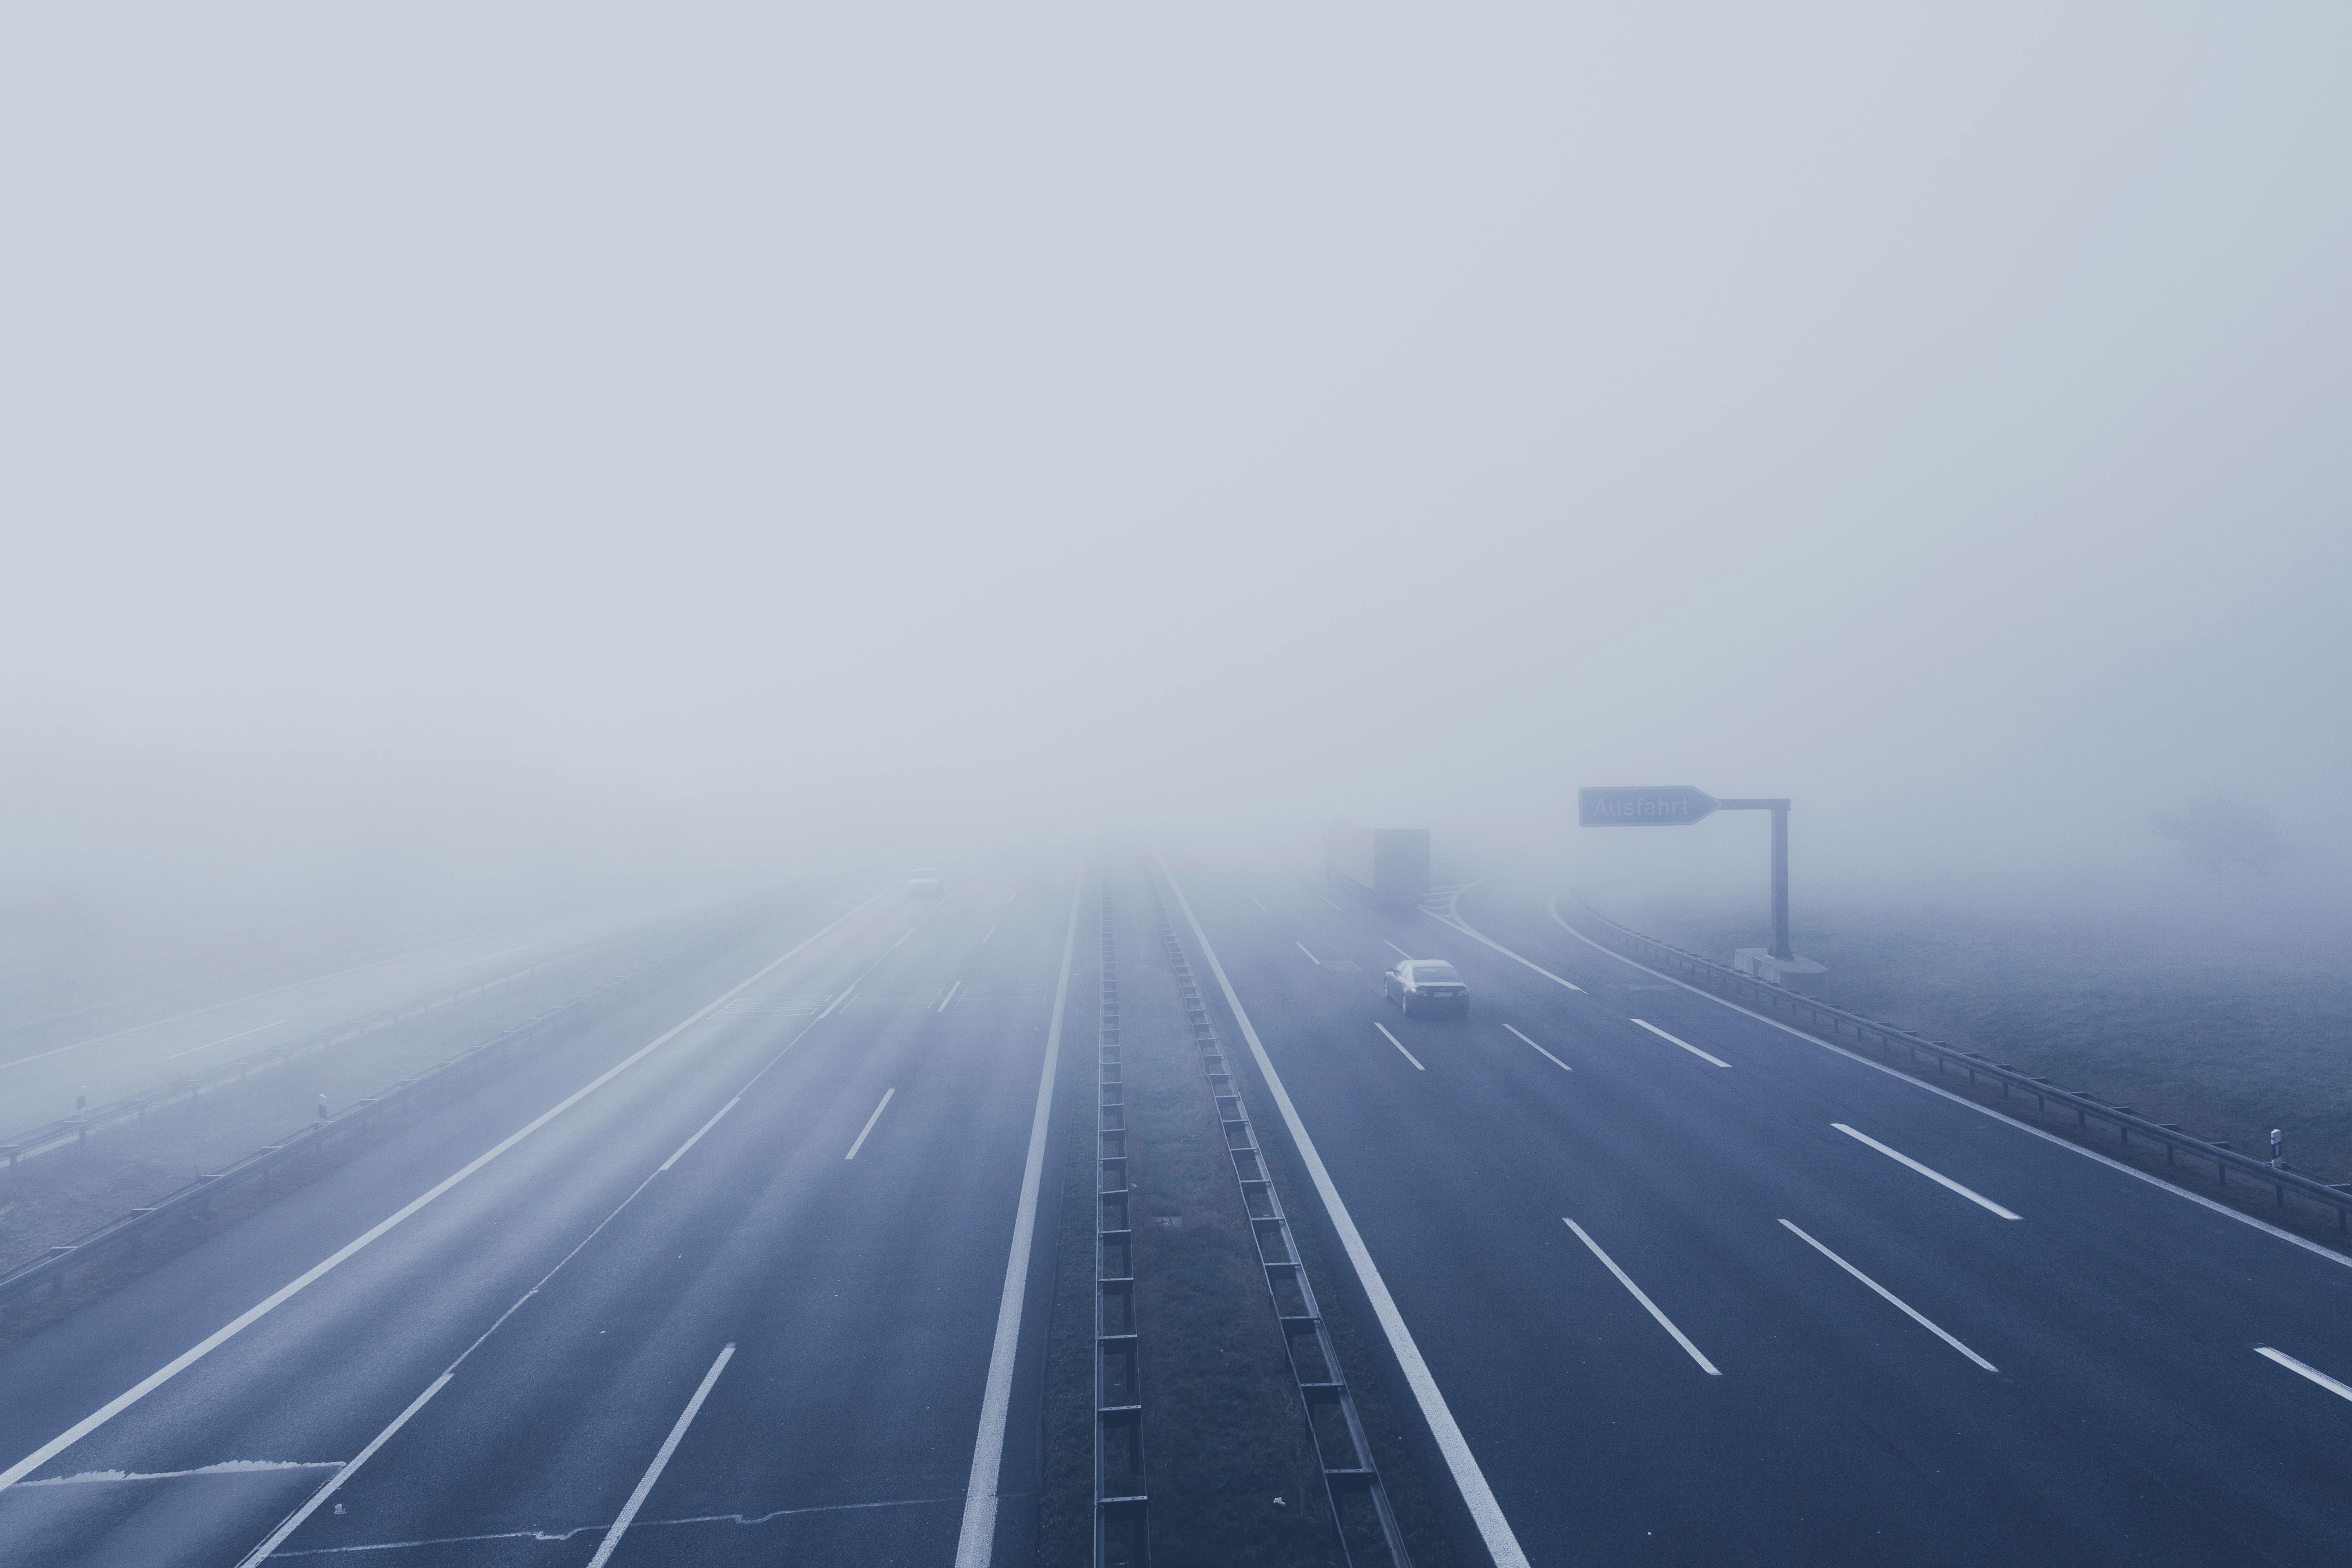 Autopista amb boira. Font: Pexels - Markus Spiske